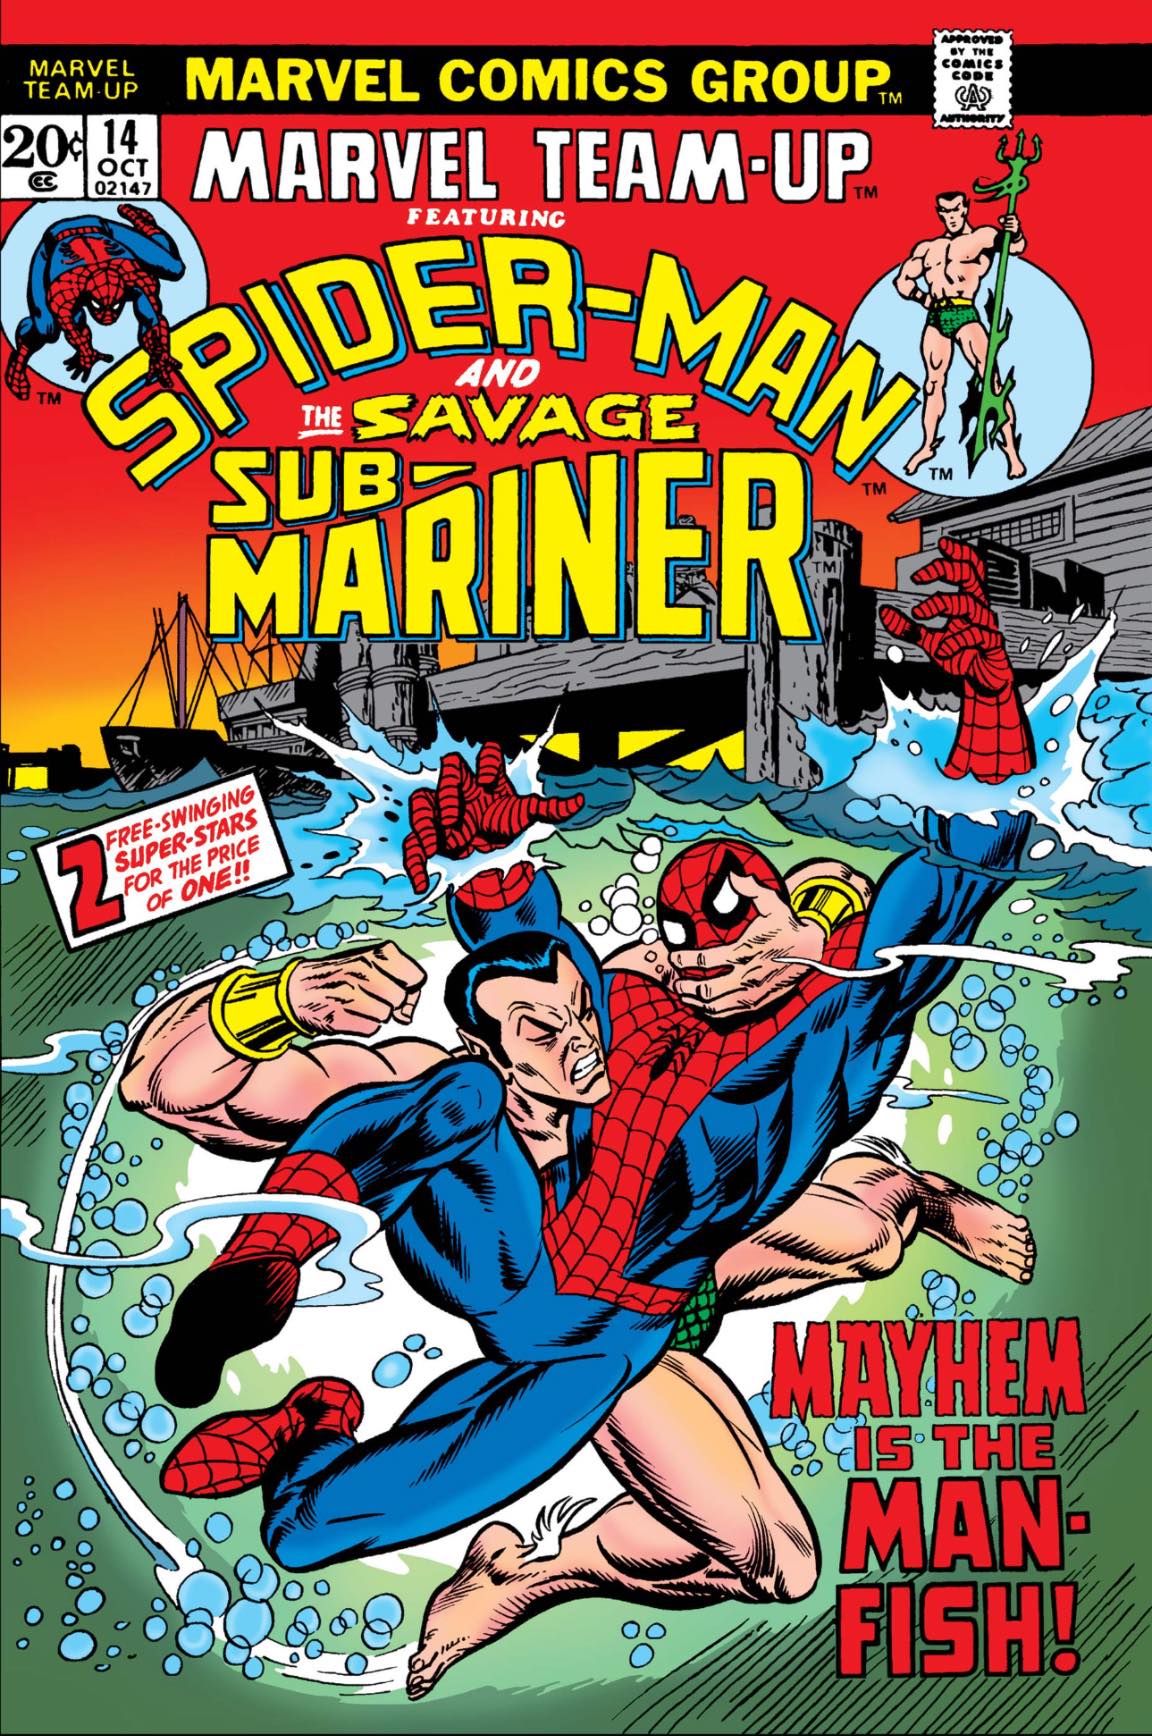 Spider-Rama: Marvel Team-Up #14